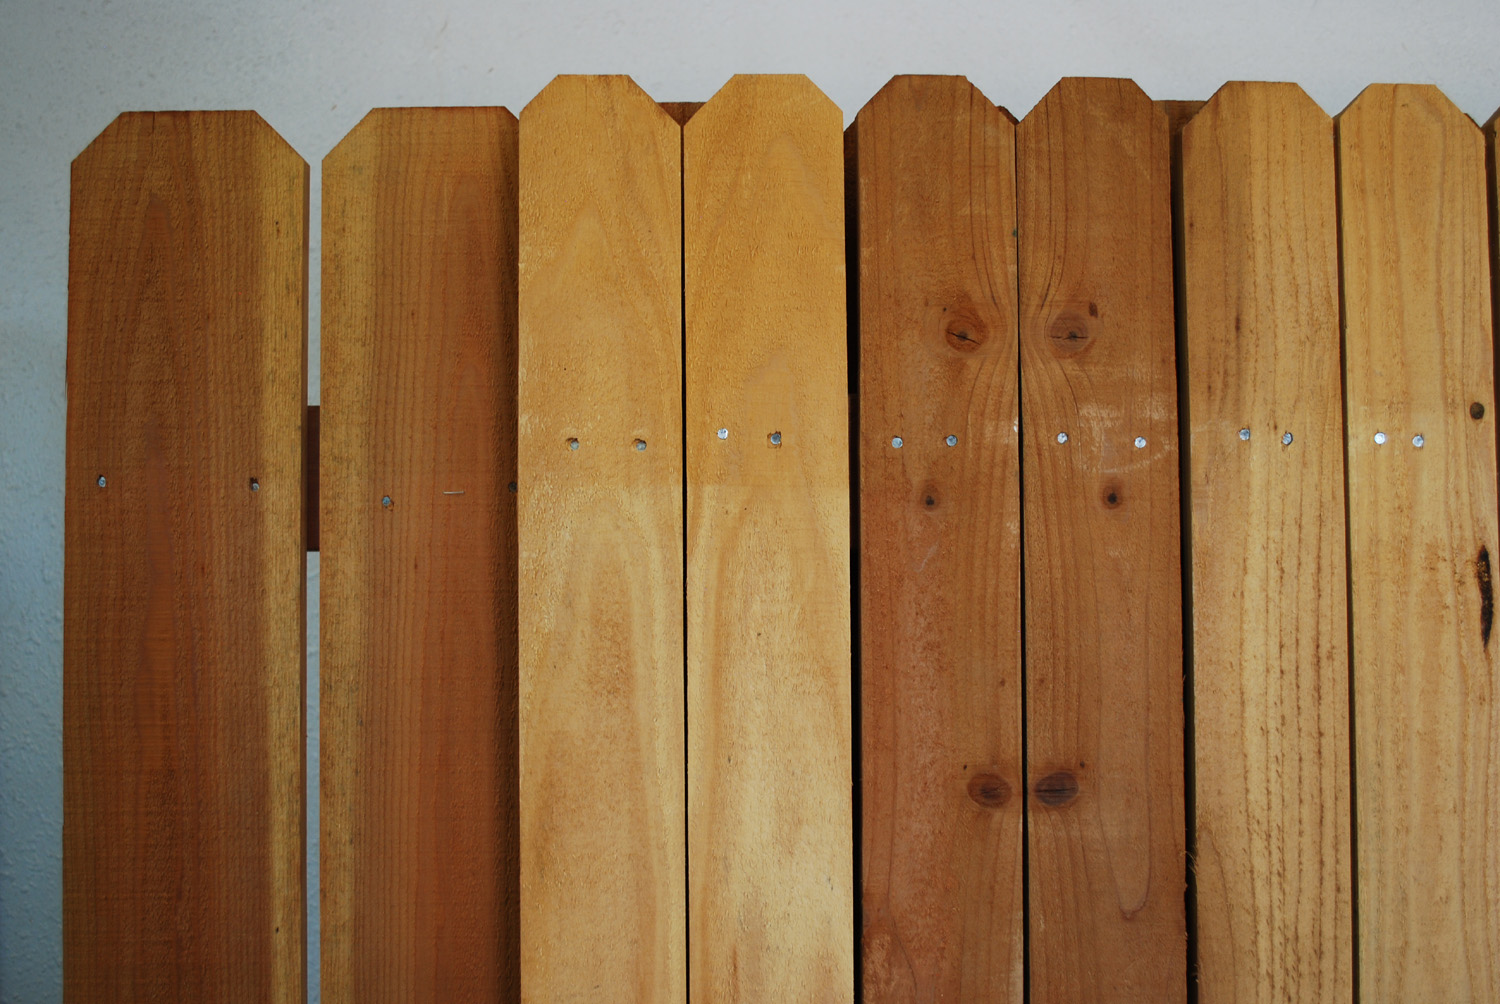 1" x 4" and 1" x 6" redwood fence panel